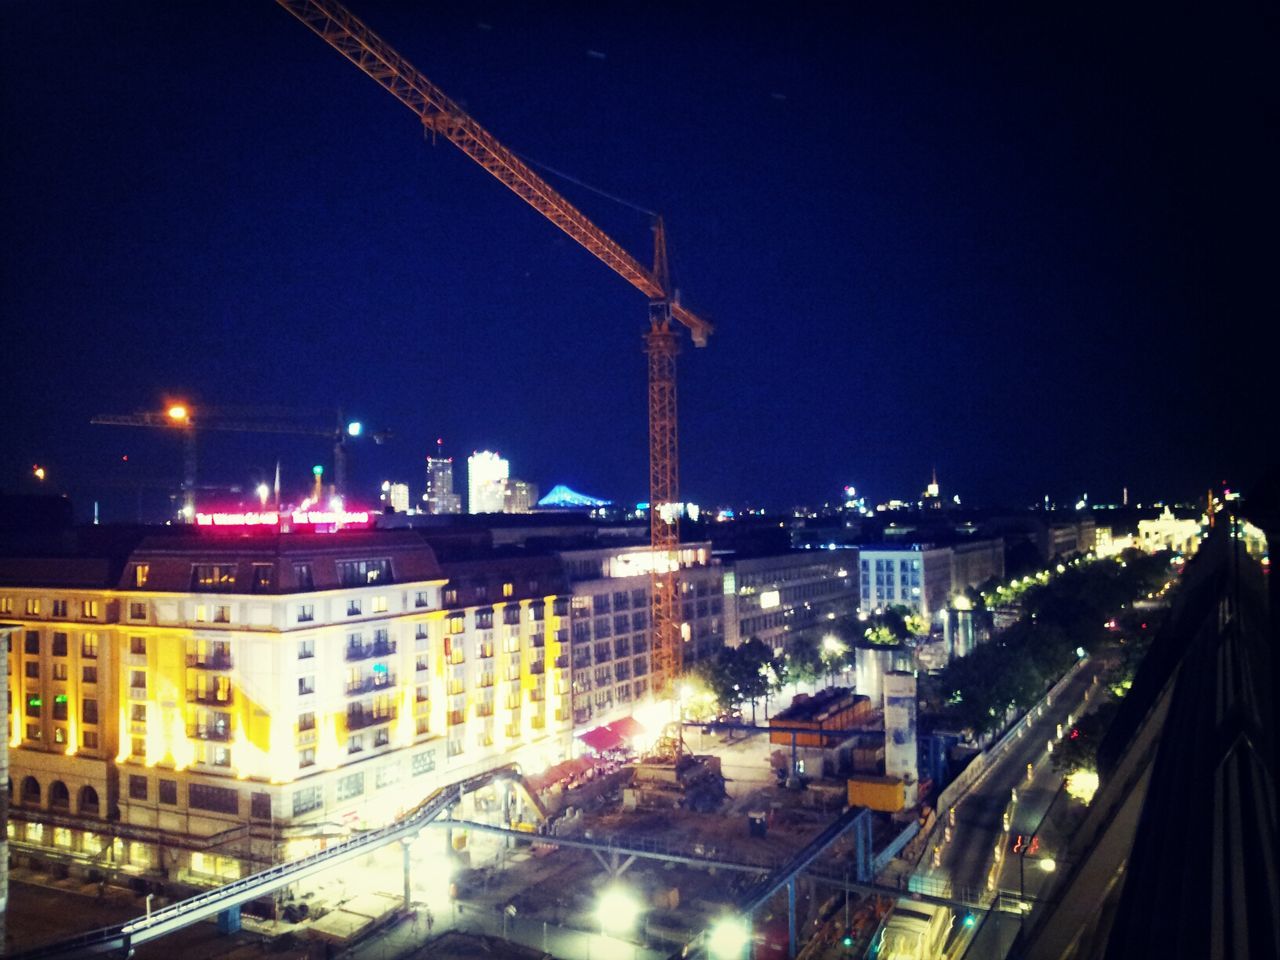 VIEW OF ILLUMINATED CITYSCAPE AT NIGHT